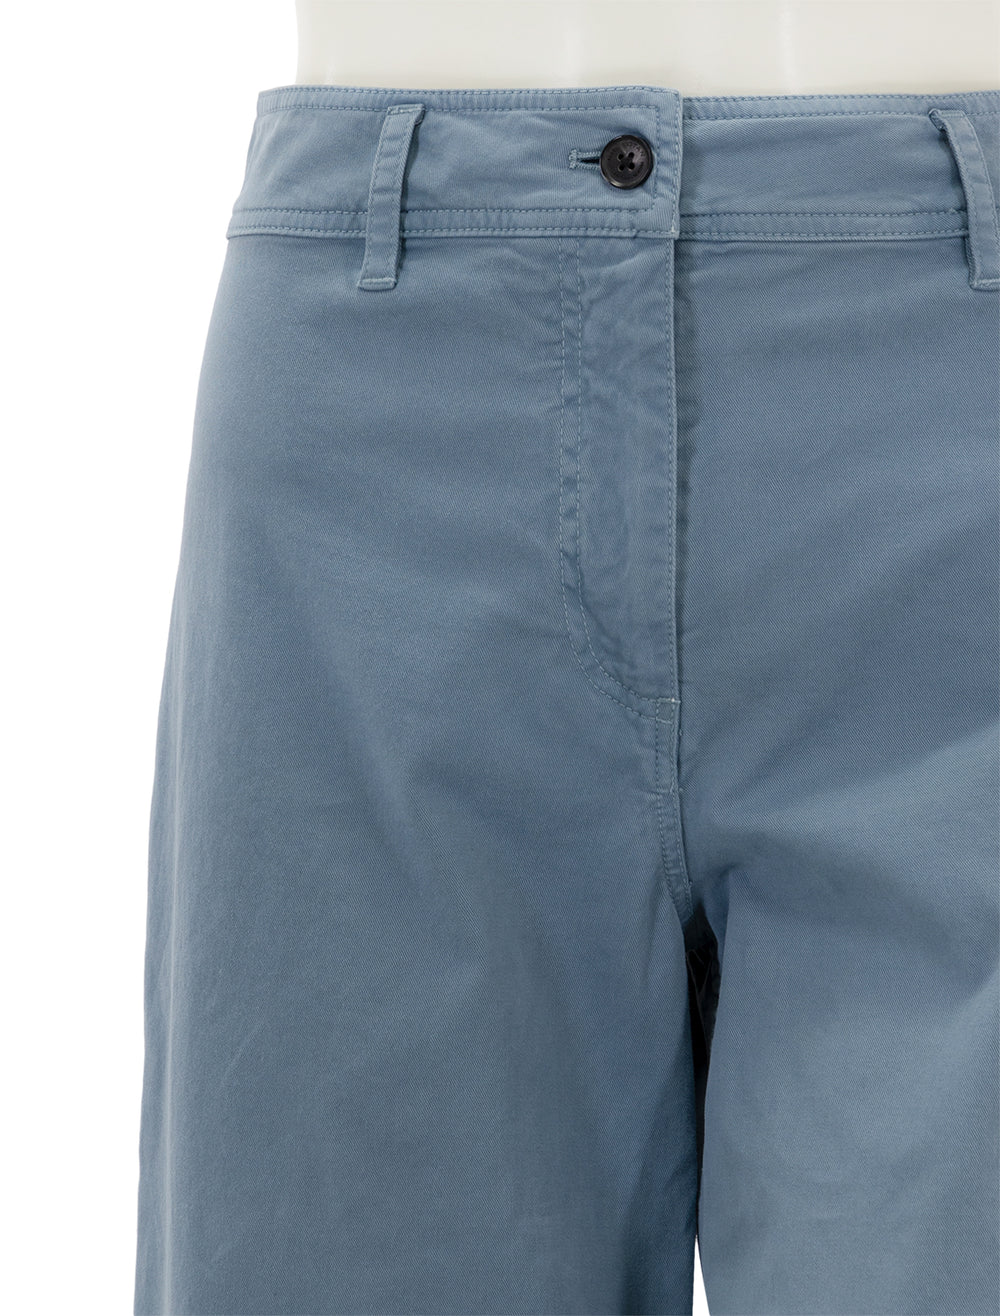 Close-up view of Nili Lotan's megan pant in vintage blue.